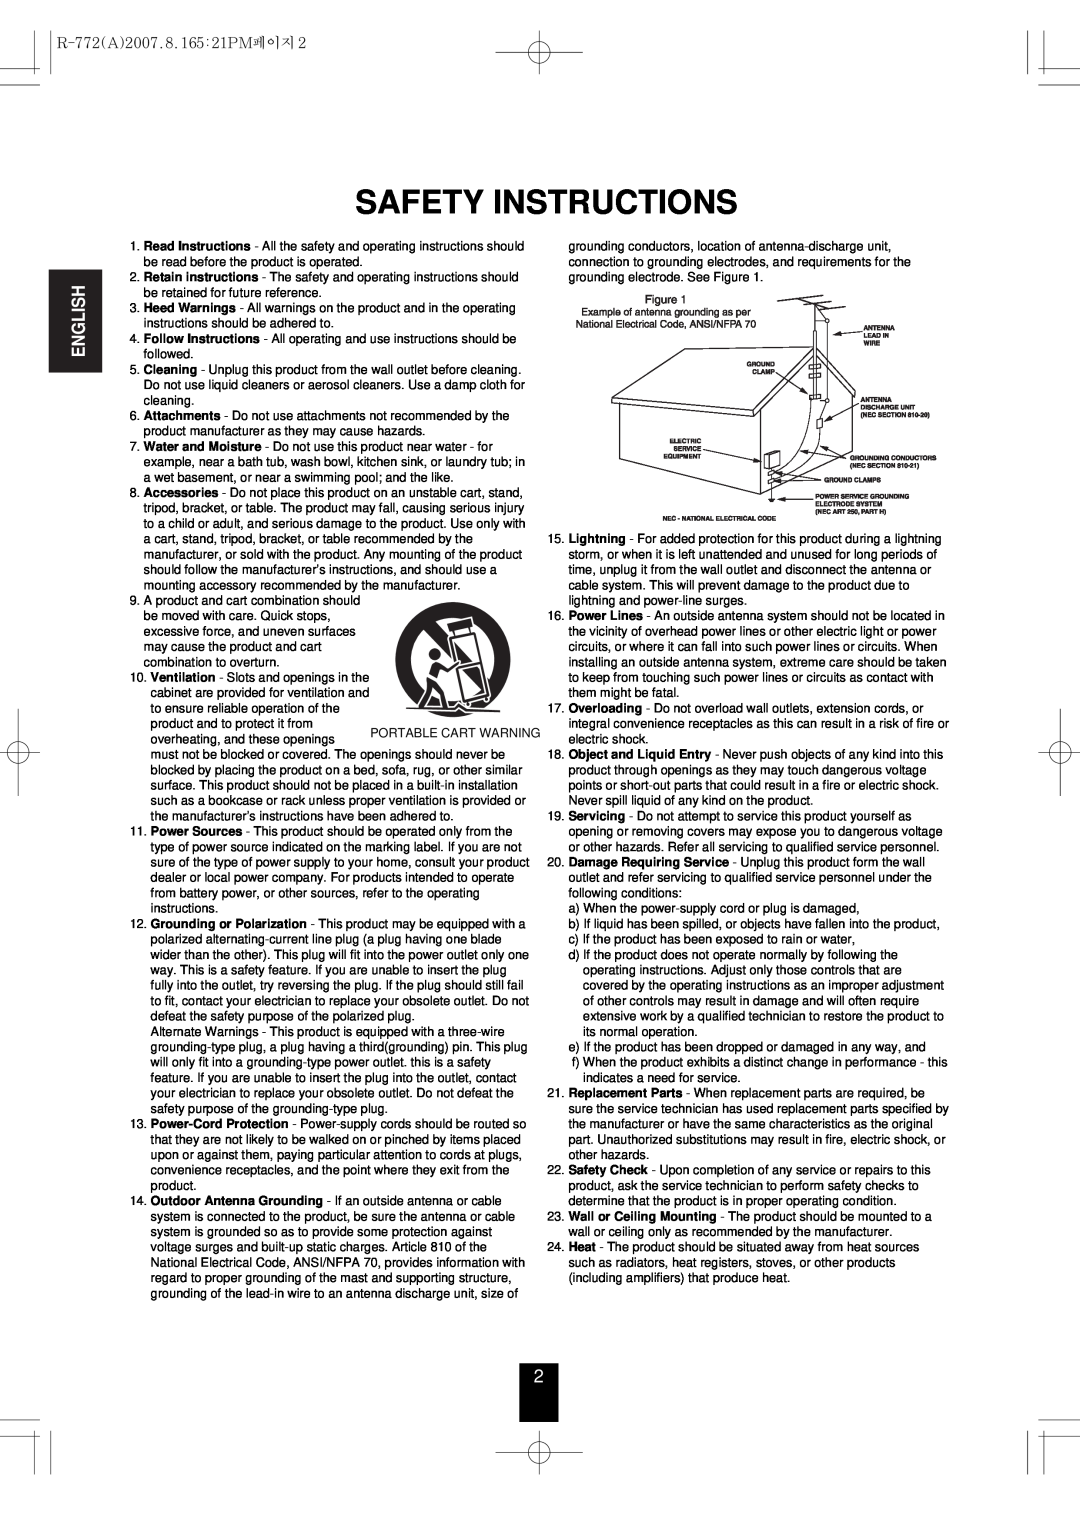 Sherwood manual English, Safety Instructions, R-772A2007.8.165:21PM페이지 